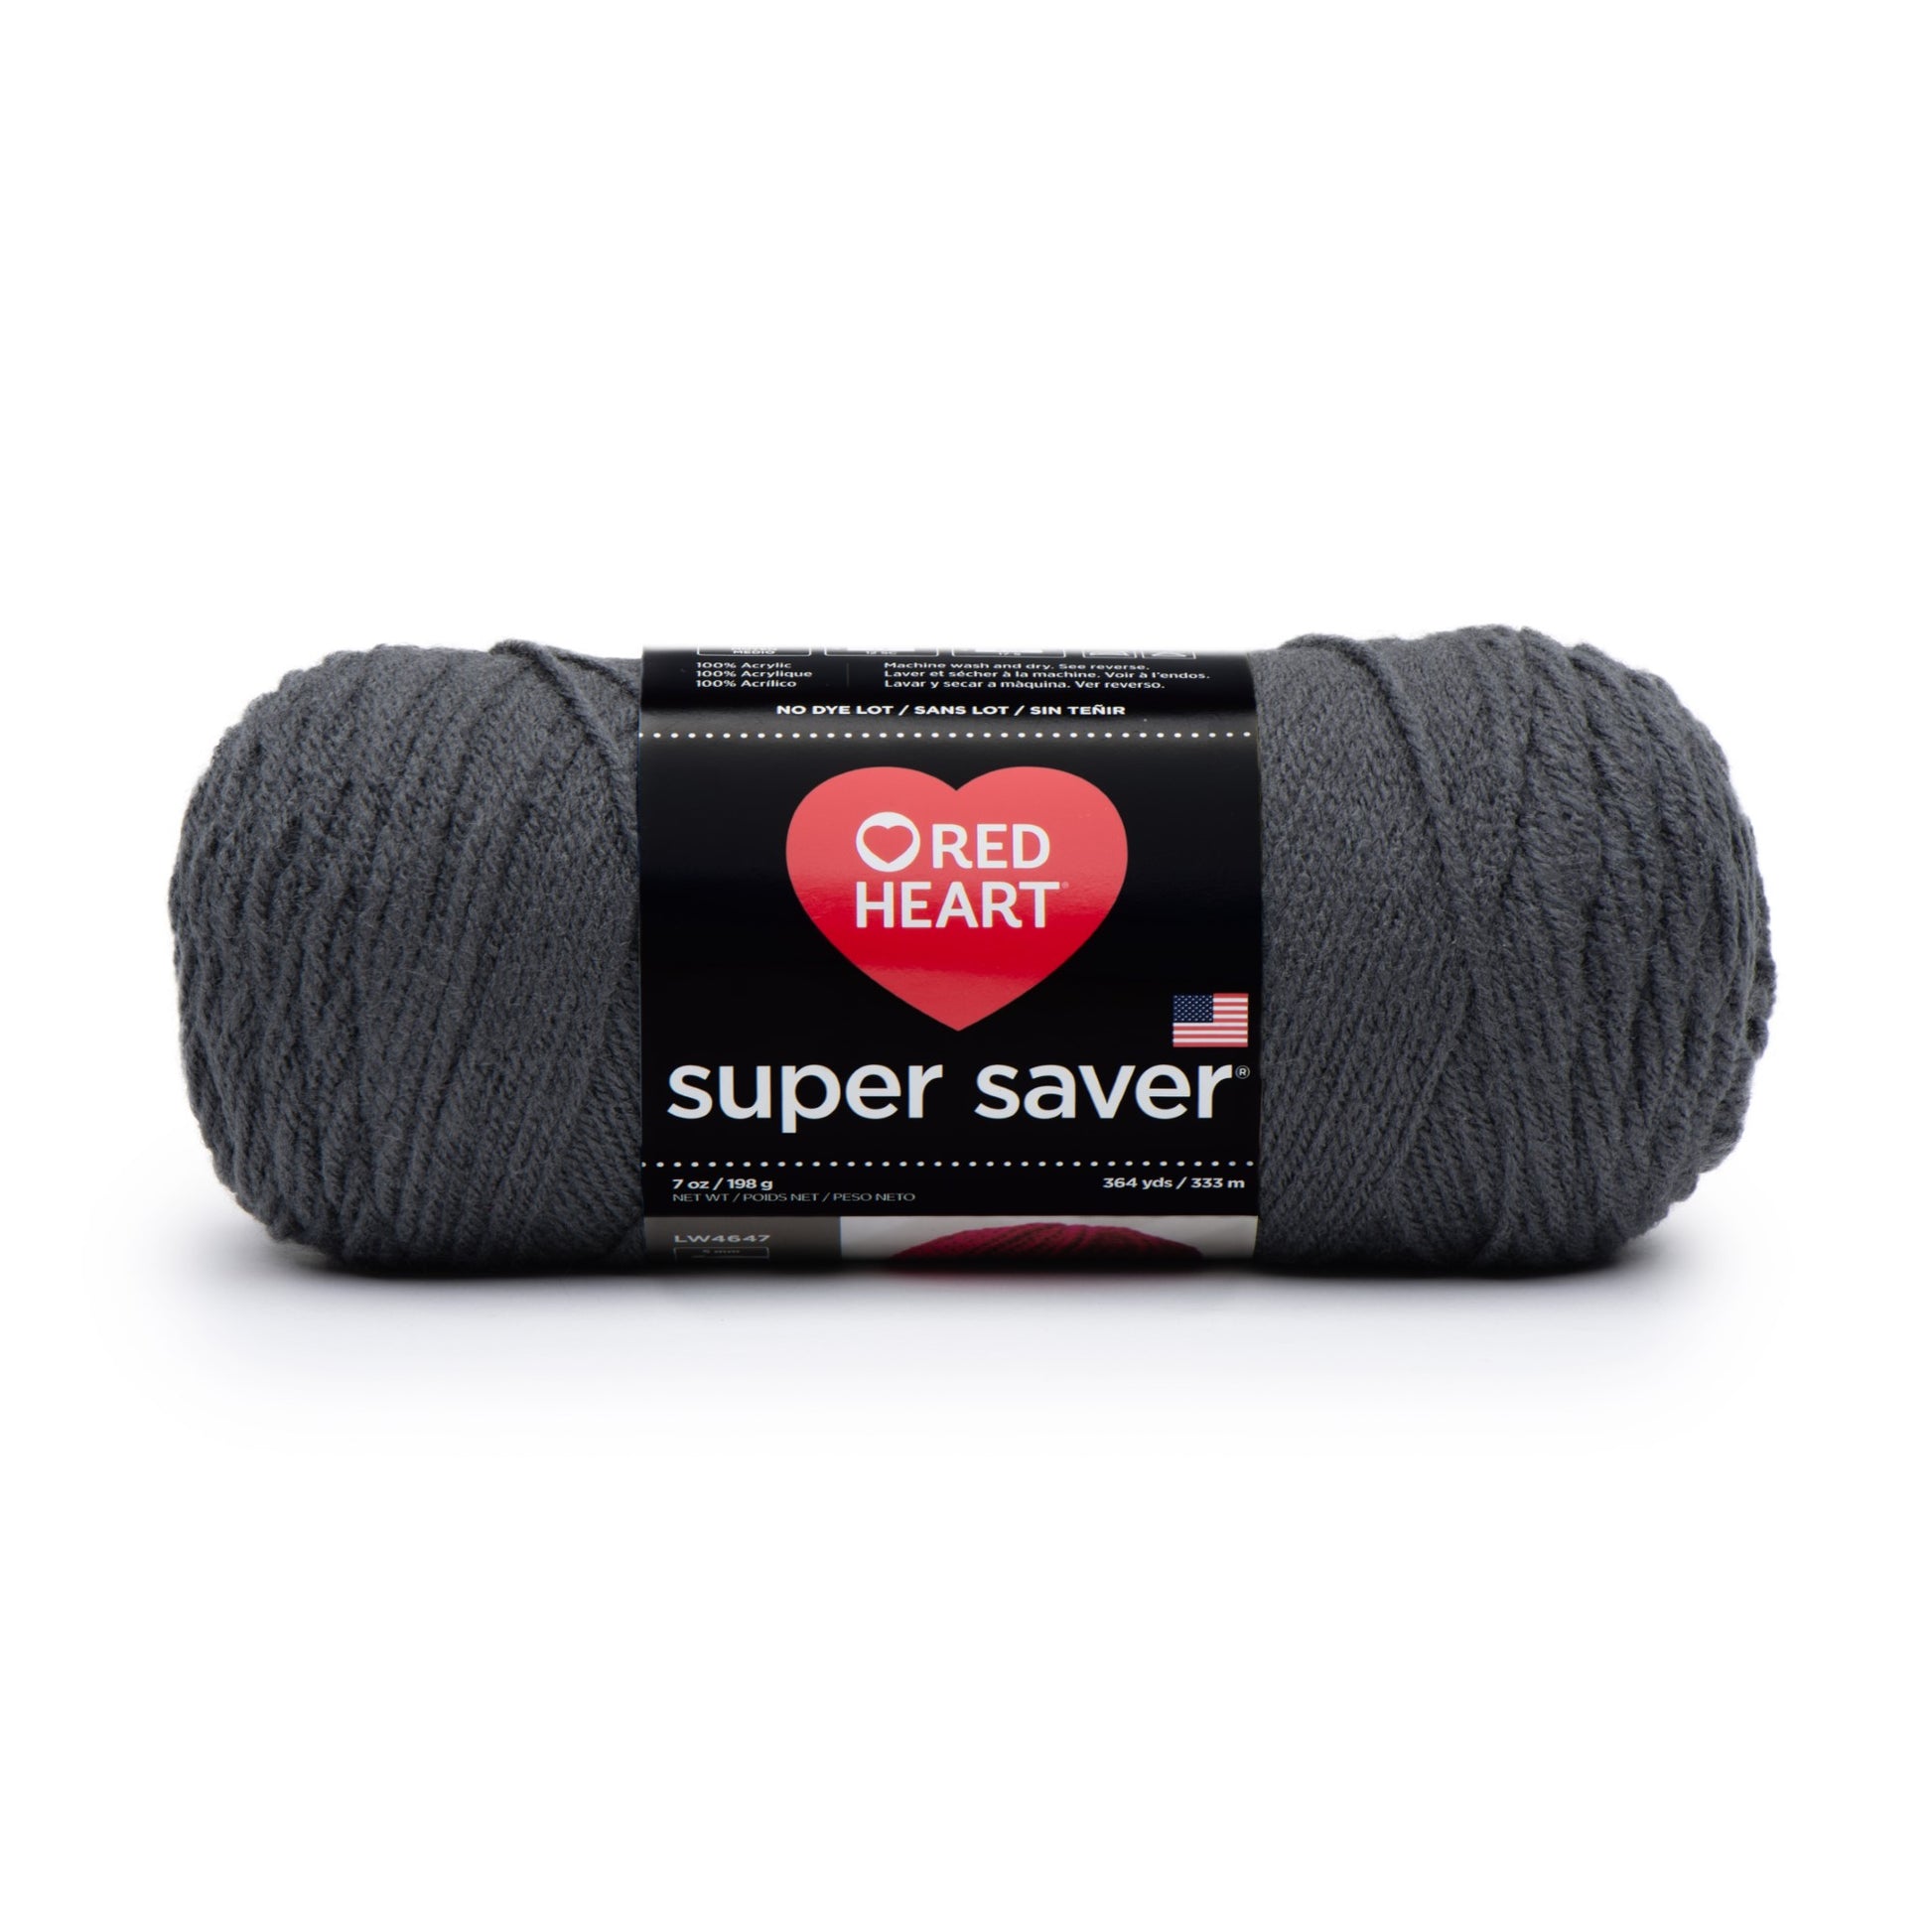 Red Heart Super Saver Yarn Charcoal